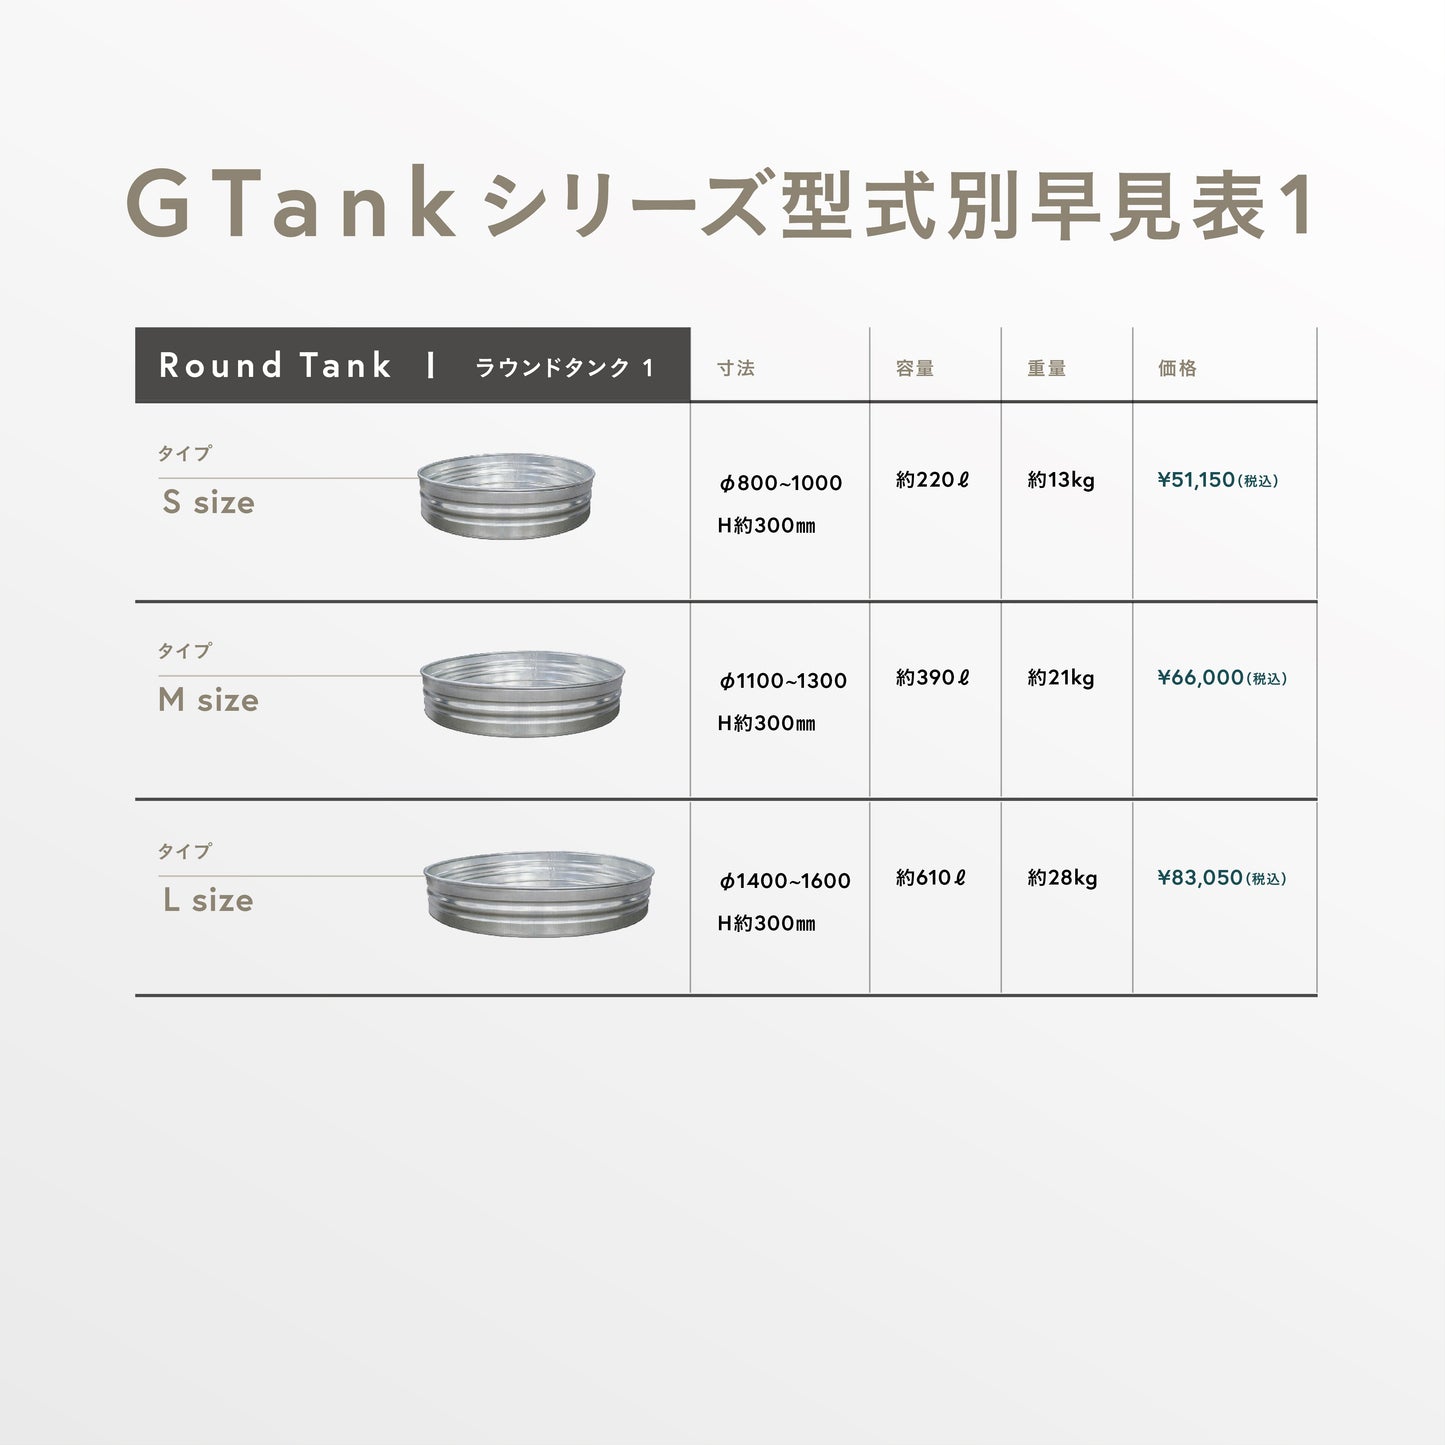 Gタンク／ラウンドタンク Ⅰ　L size